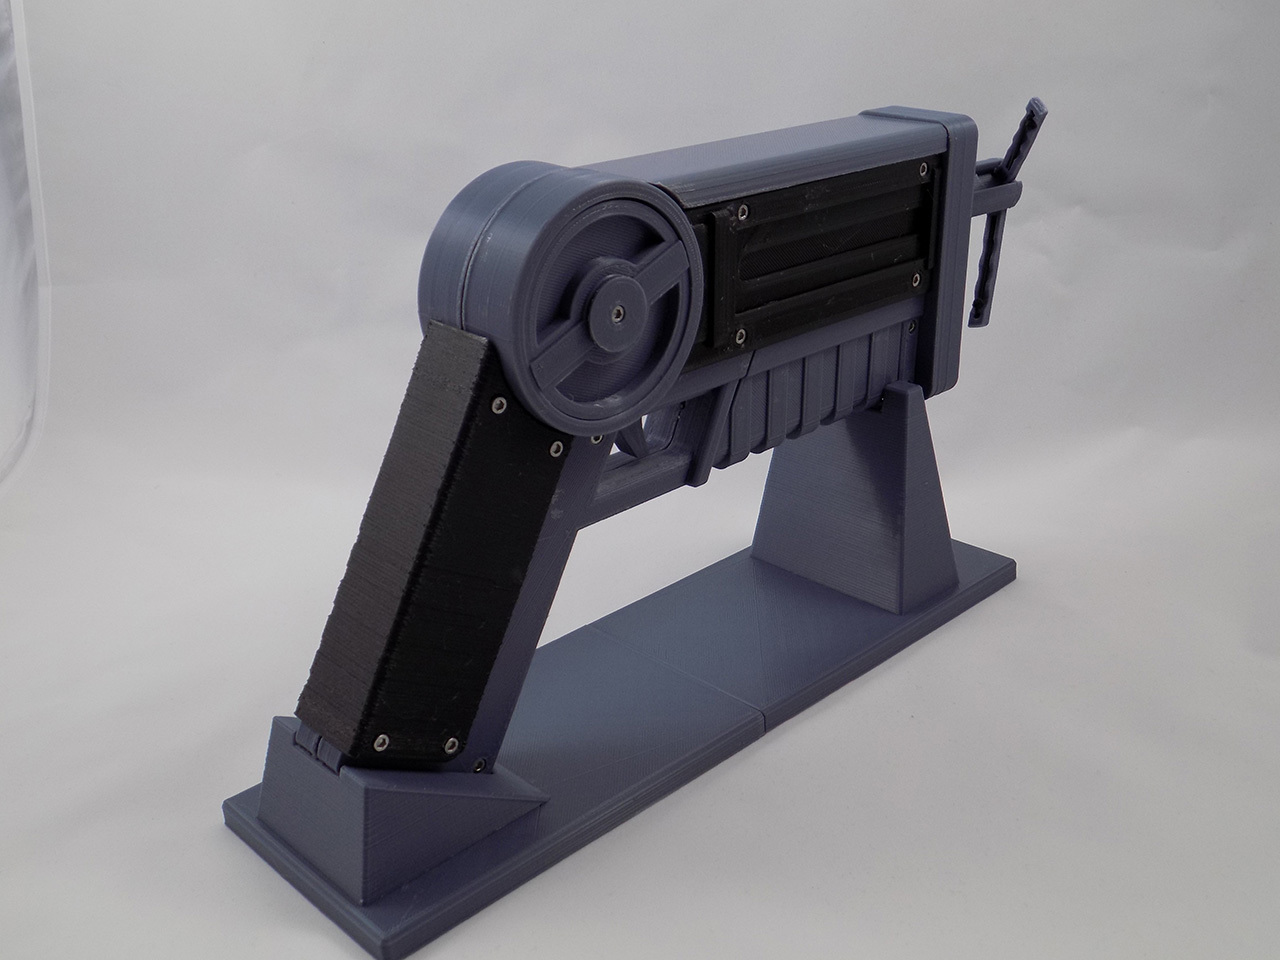 3D Printed Batman Grapple Gun (functional toy gun) by Makers